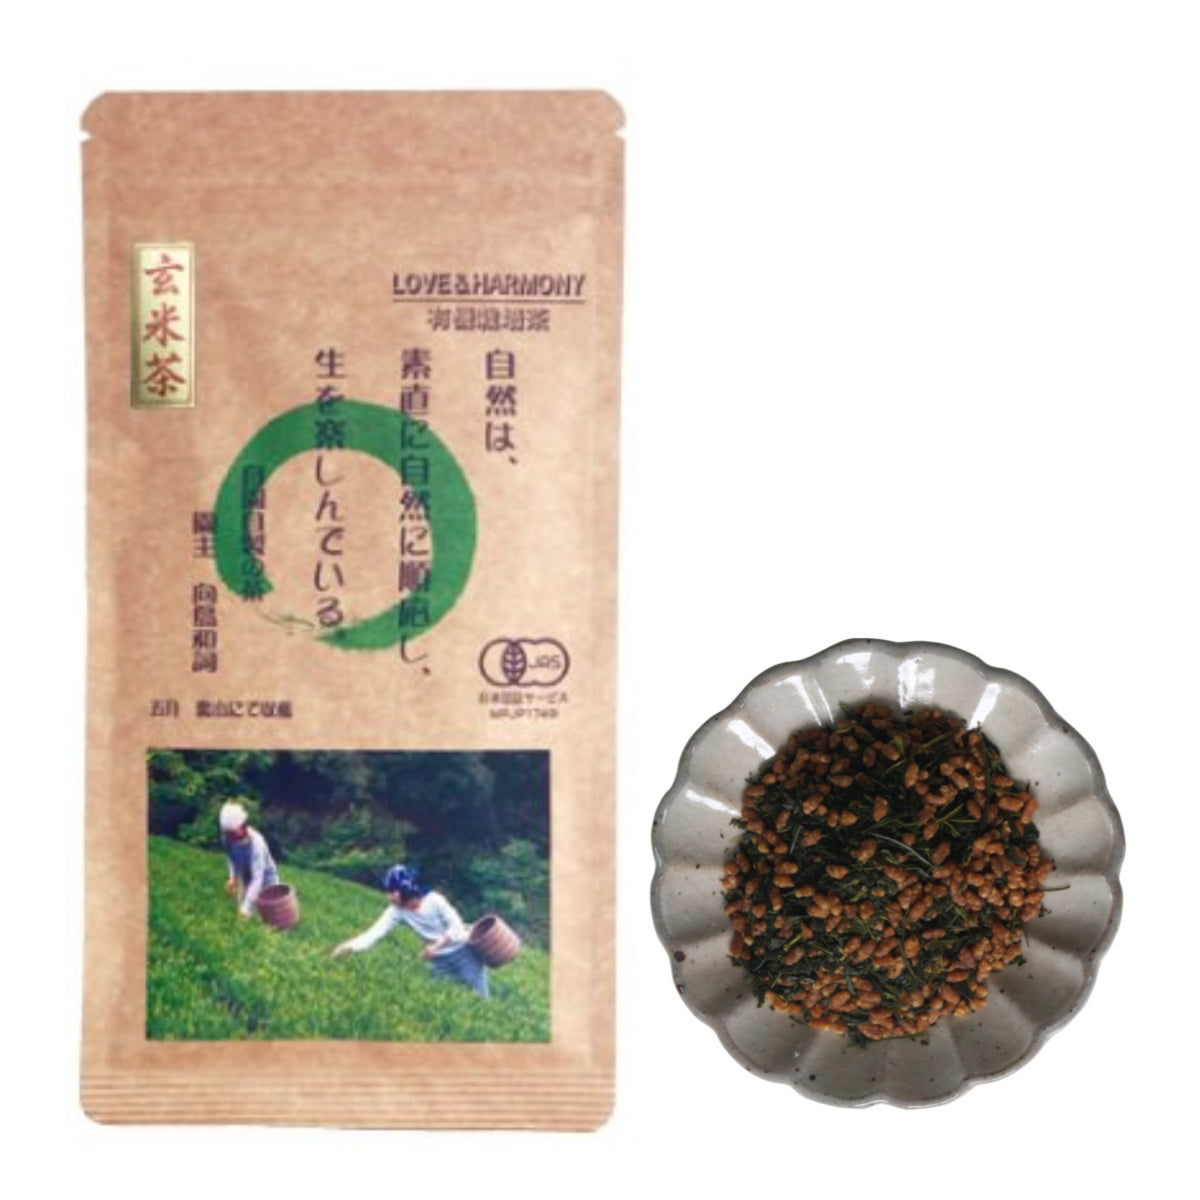 Brown Rice Tea "Genmaicha" 80g/2.82oz x 2pcs